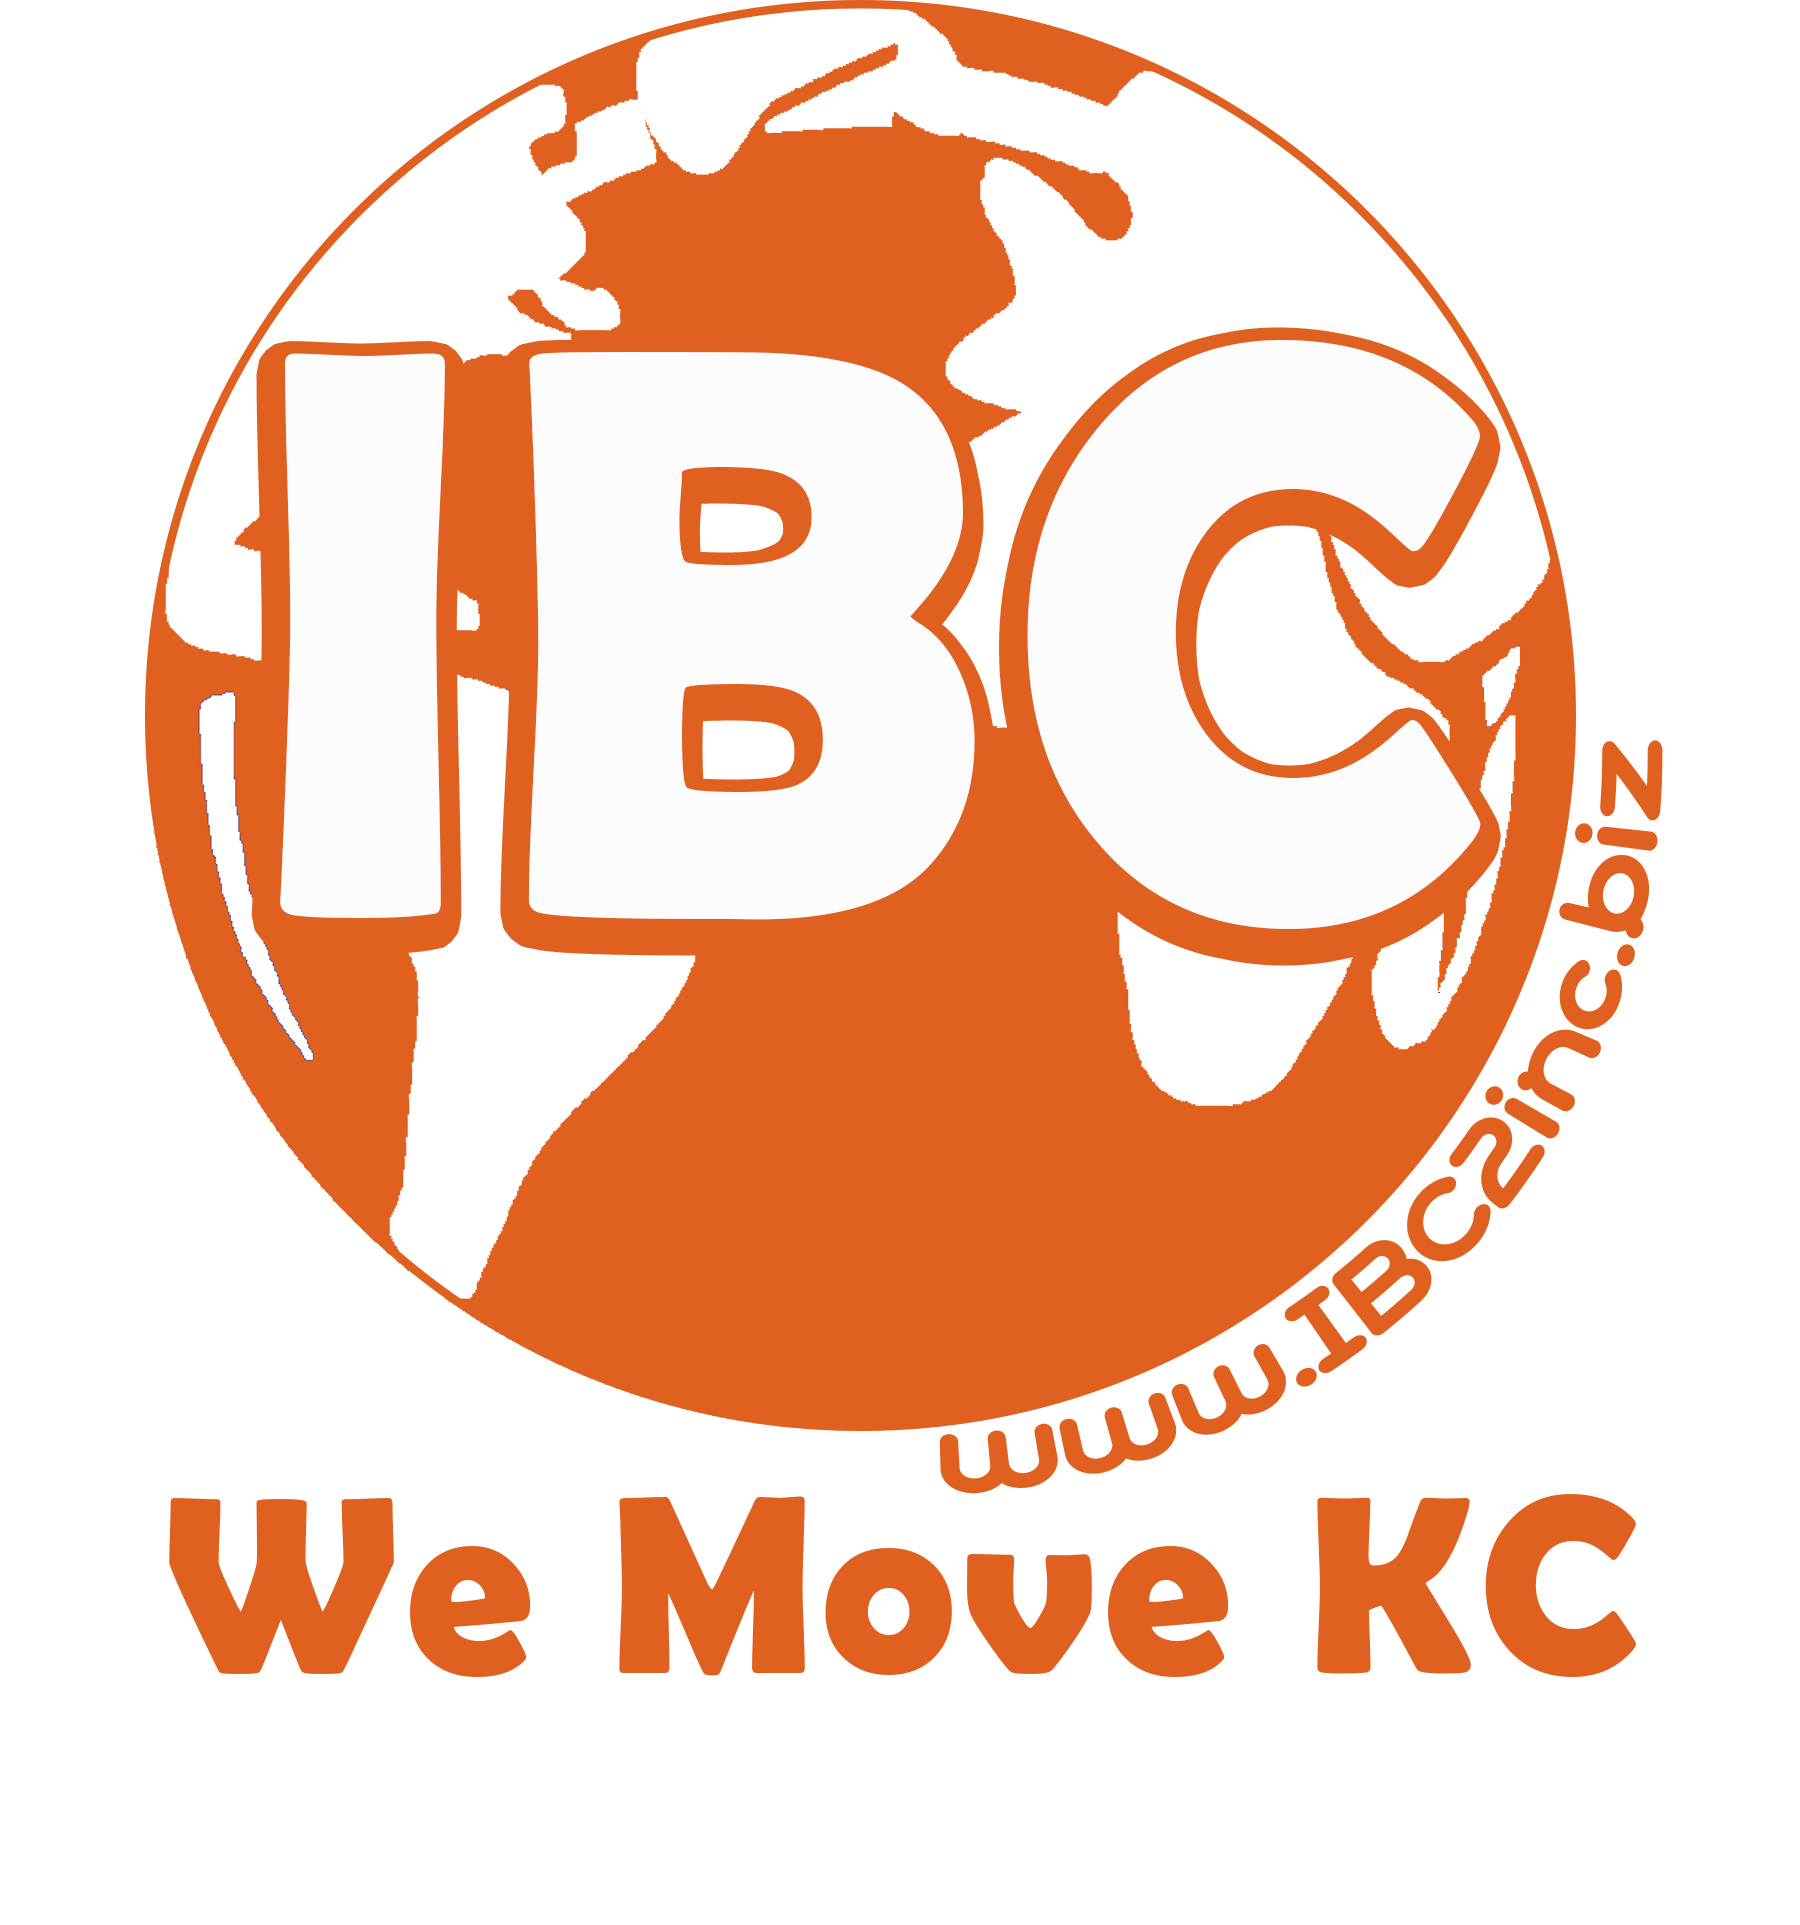 IBC Traffic logo